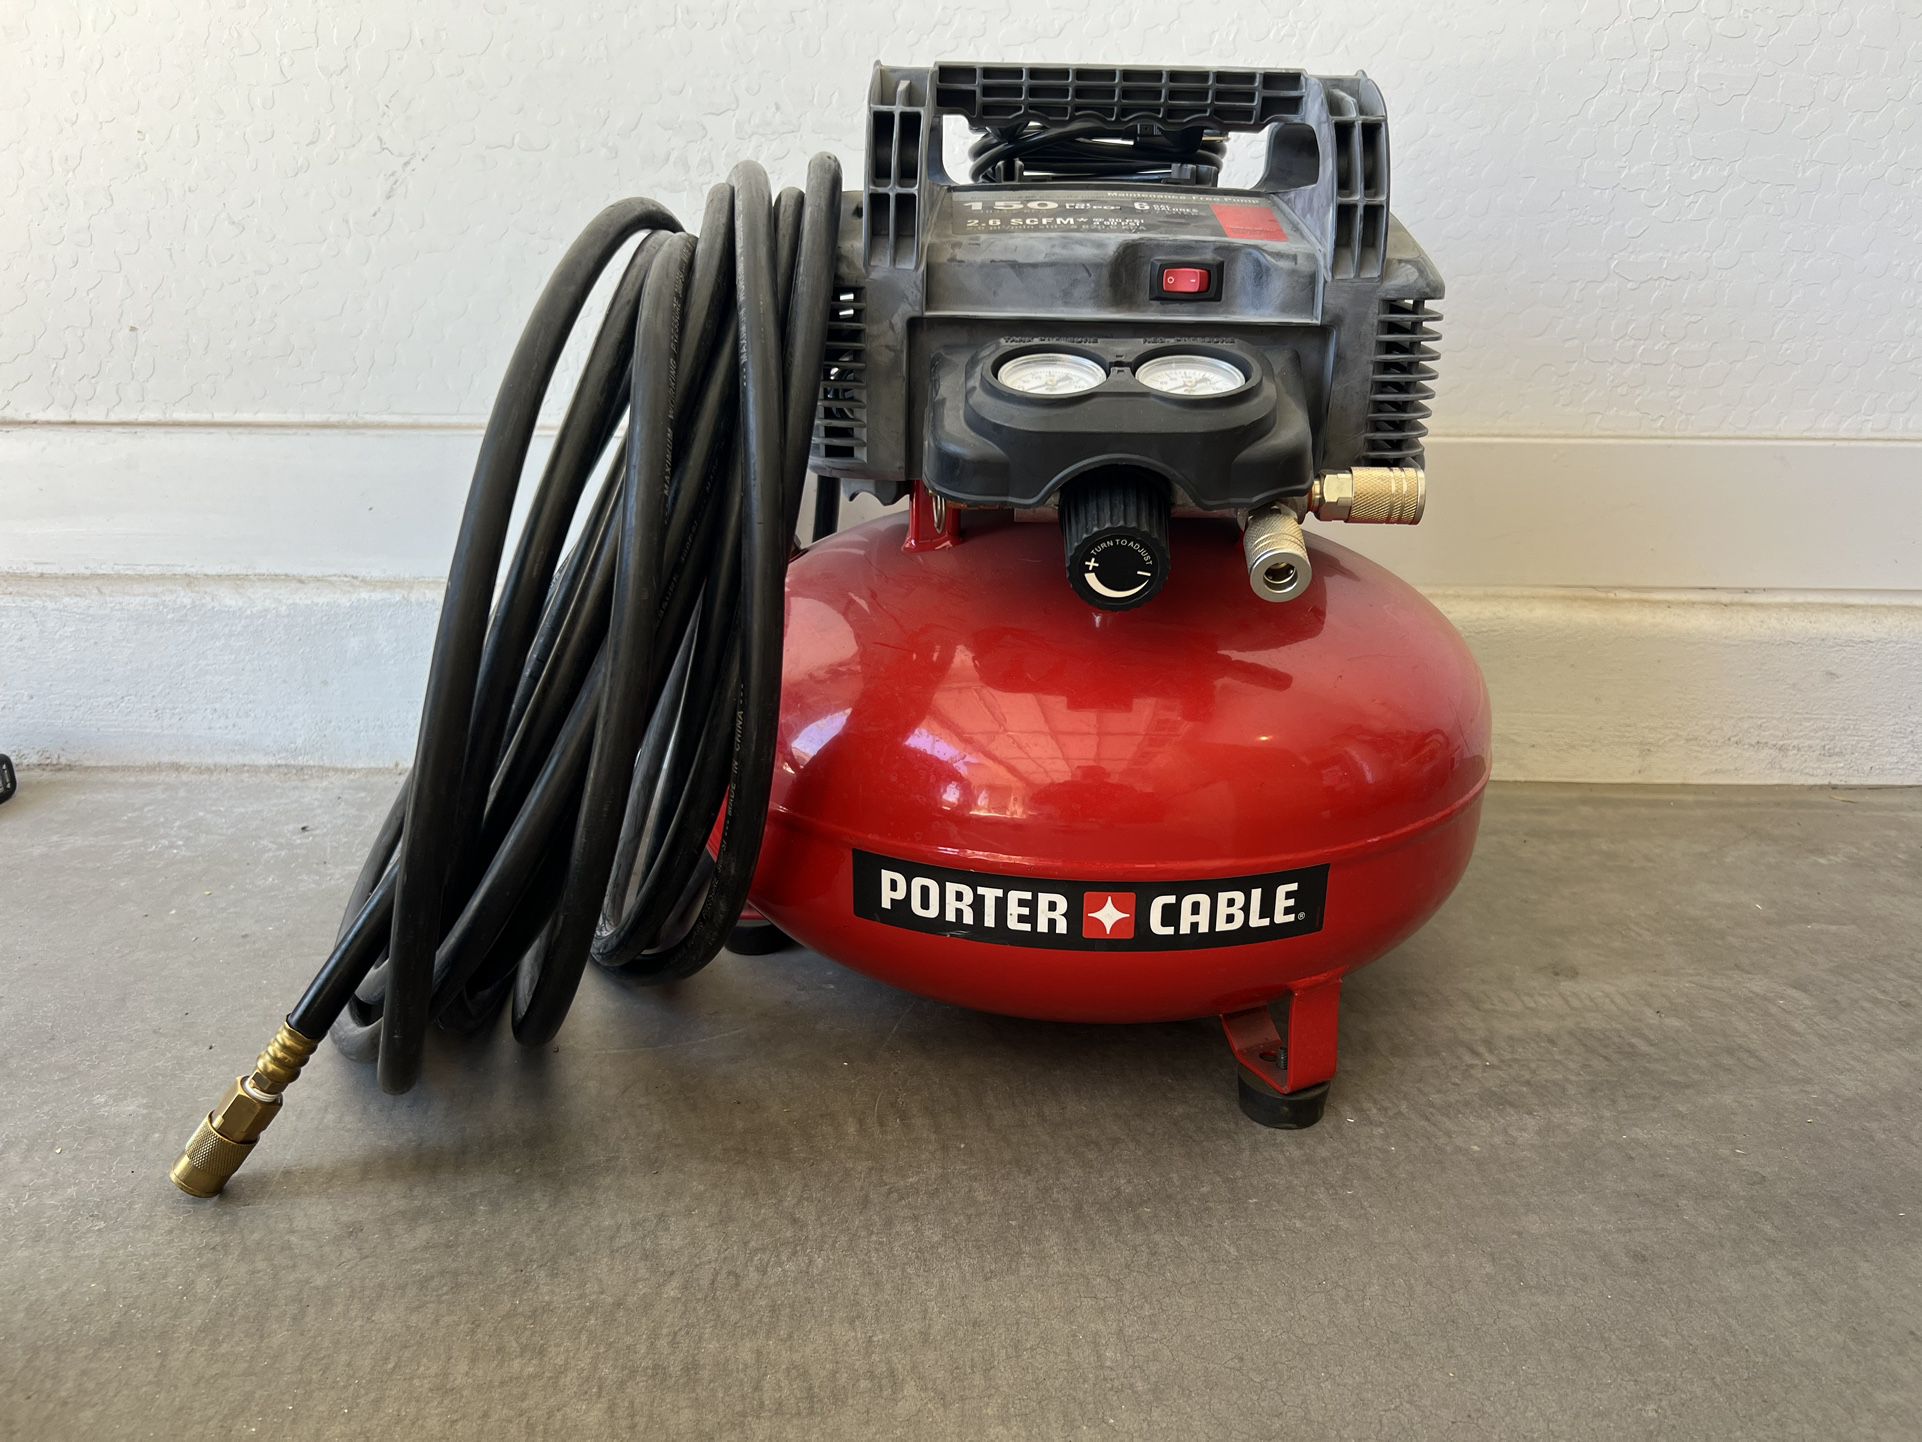 Porter & Cable Air Compressor